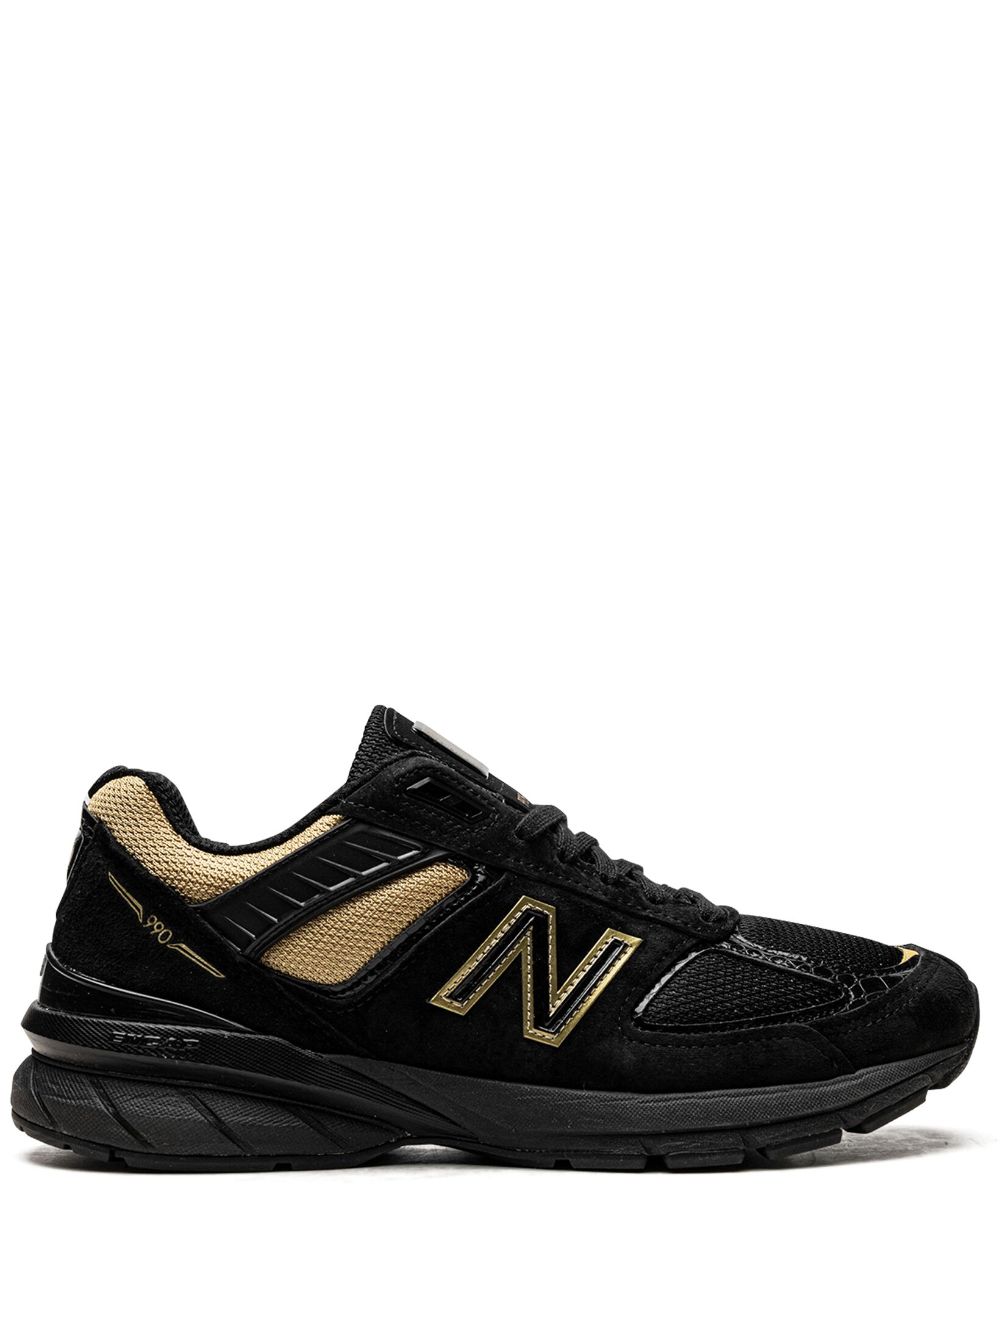 New Balance 990V5 "Black/Gold" sneakers von New Balance